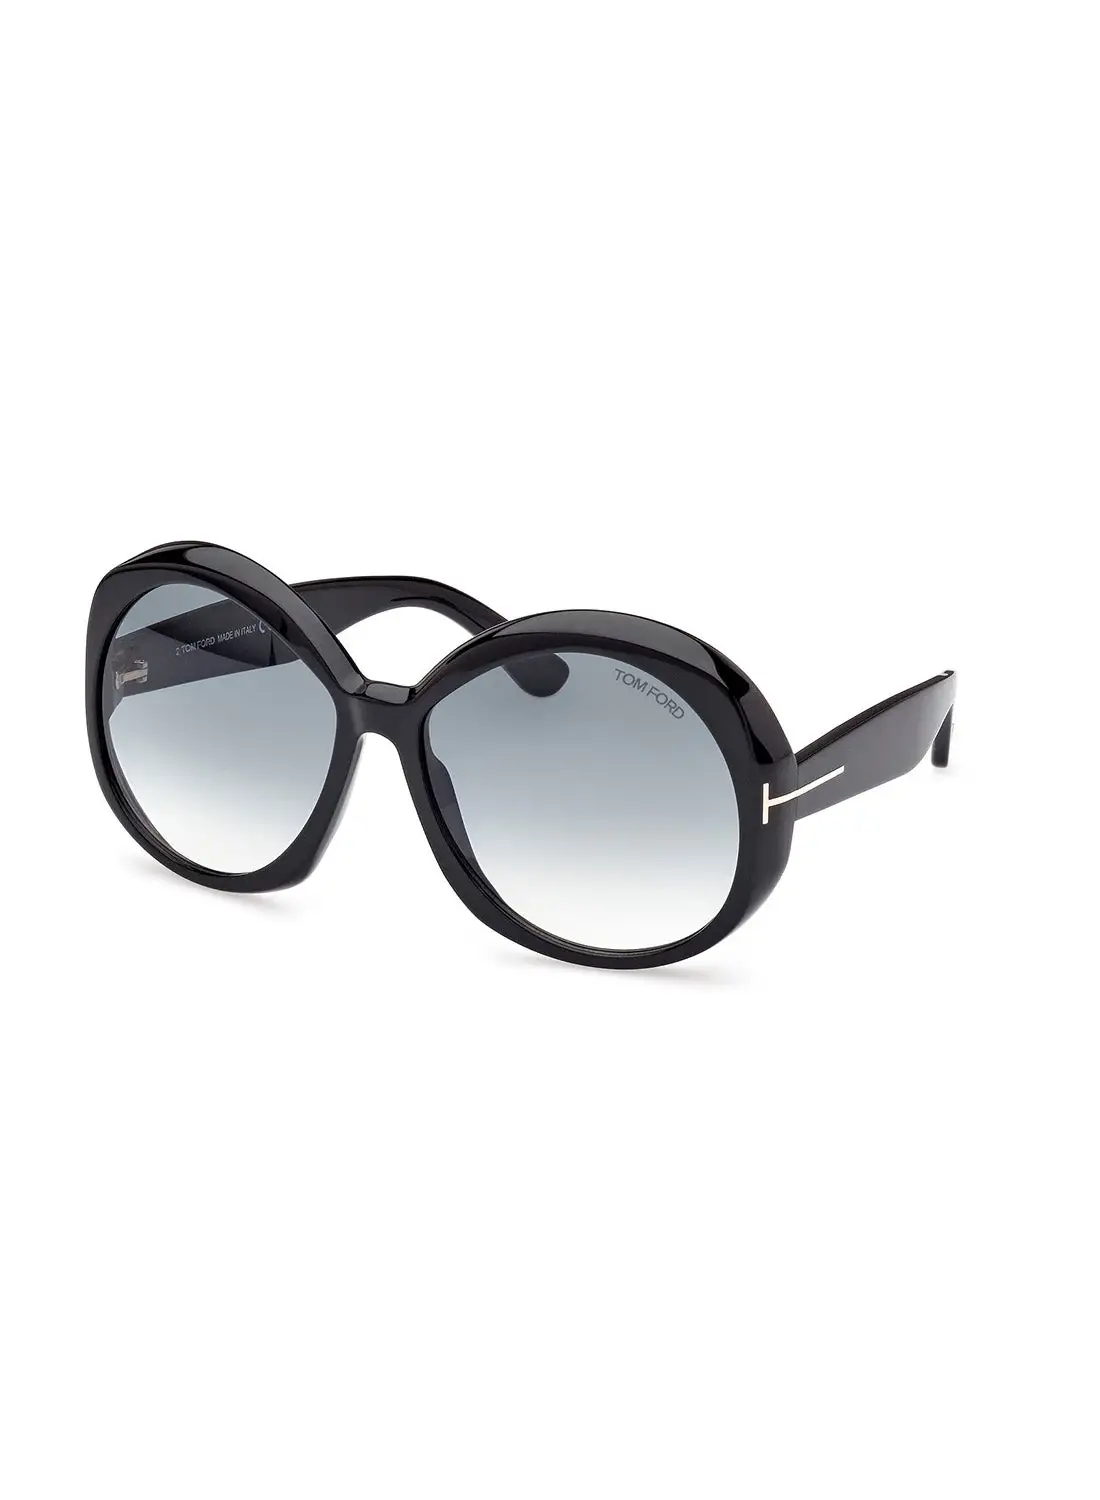 TOM FORD Women's UV Protection Round Sunglasses - FT101001B62 - Lens Size: 62 Mm